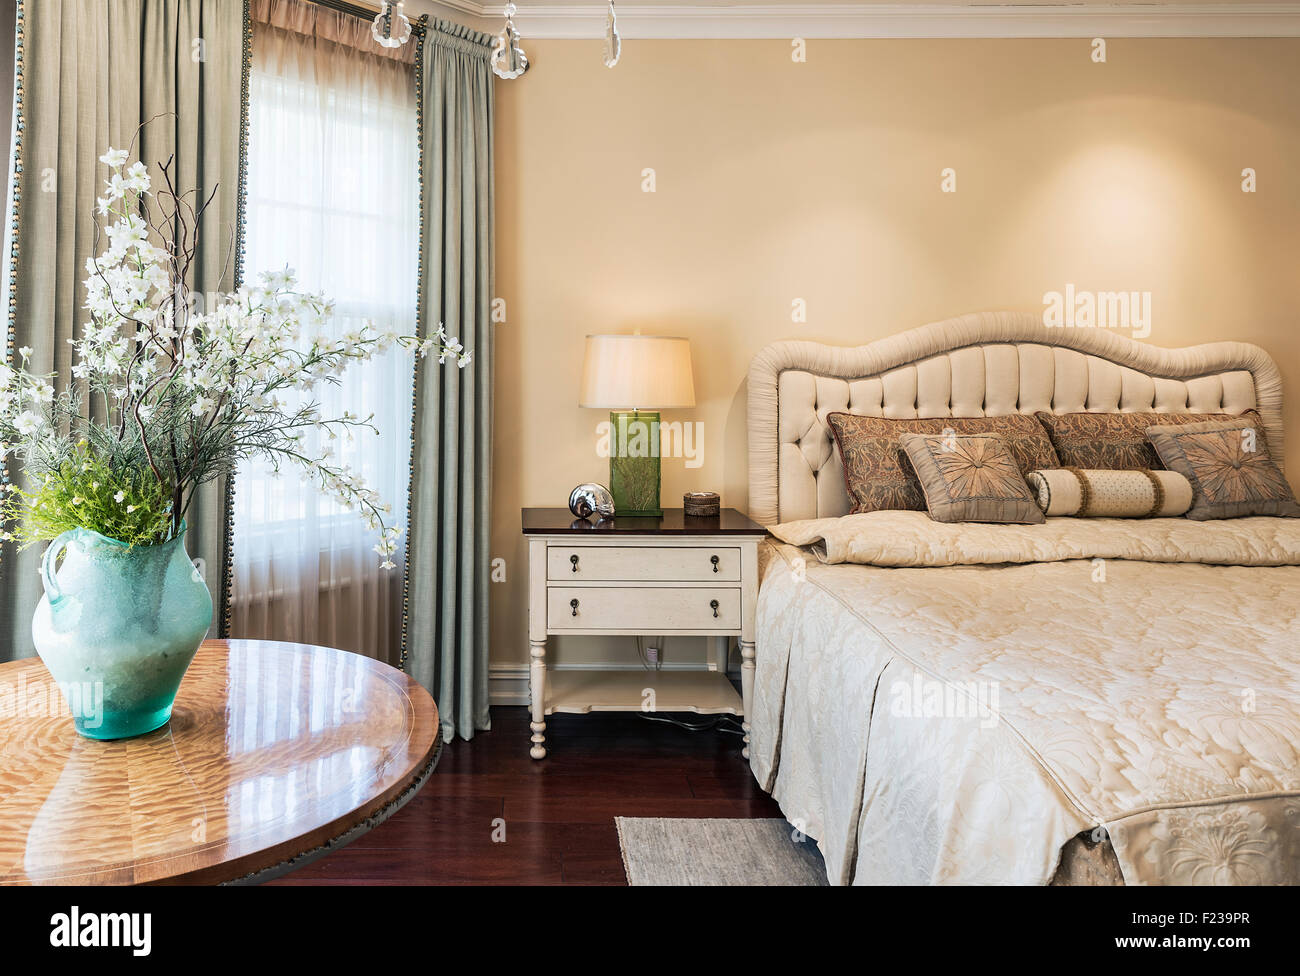 Elegant interior design of a bedroom. Stock Photo